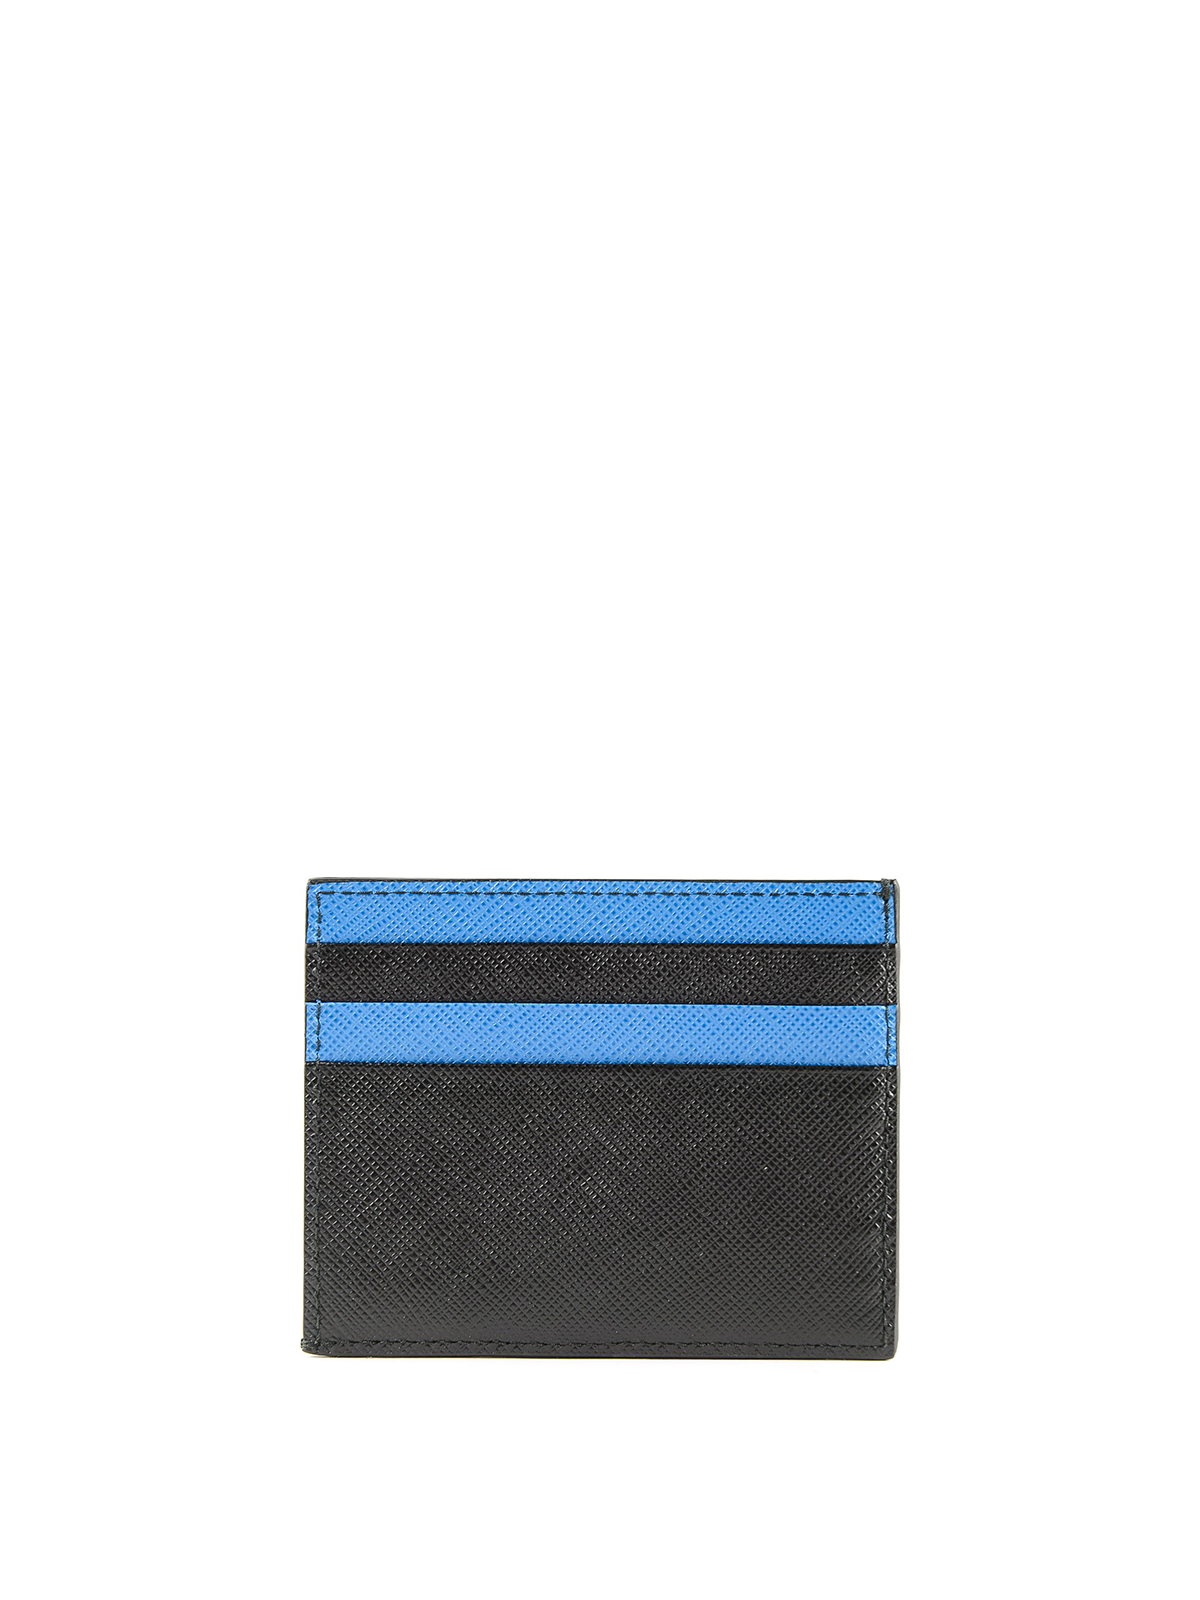 Prada Saffiano and Leather Card Holder - Black